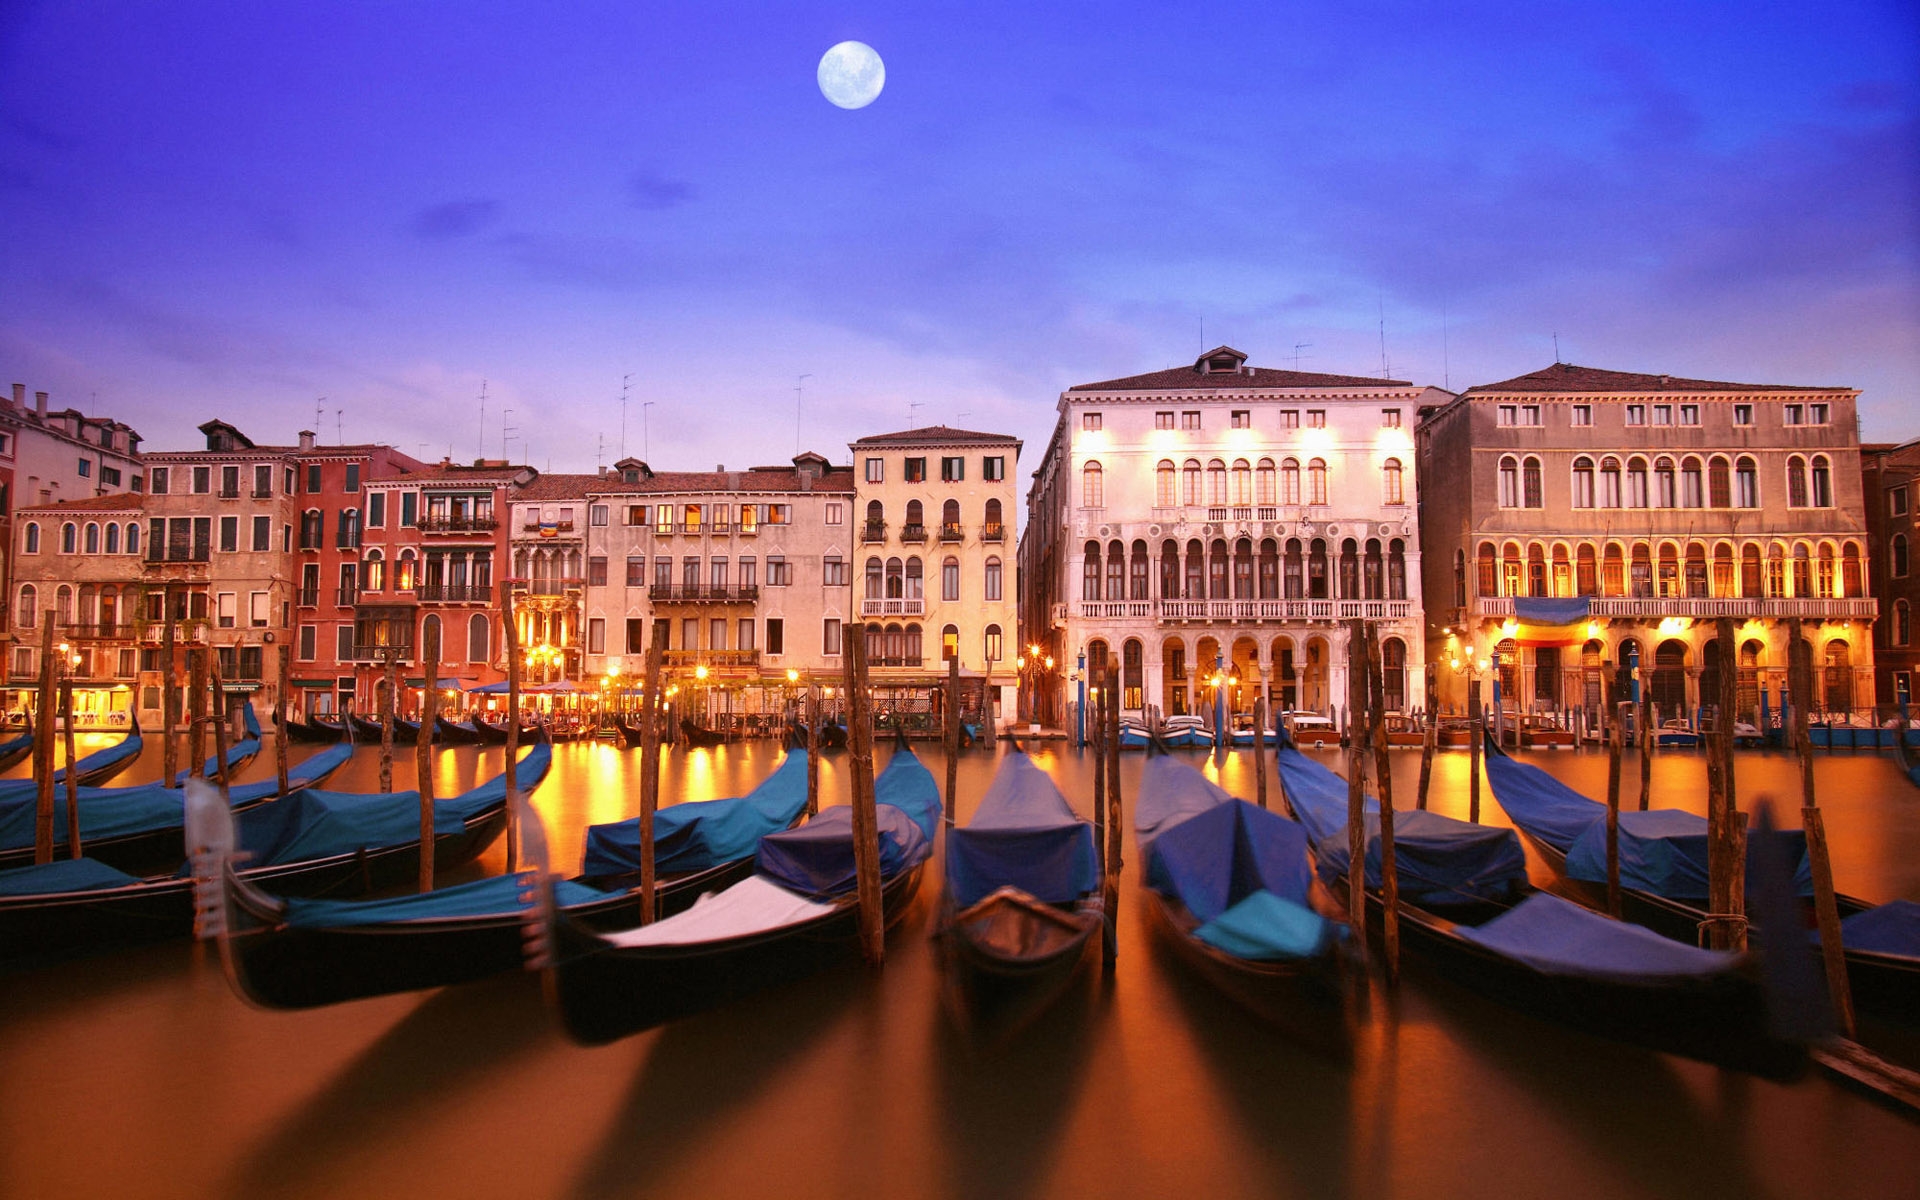 Картинки Венеция, Италия, город на воде, ночь, луна, строительство, строительство, дом, архитектура, гондола, лодки, вода, река, канал, свет, освещение, огни, отражение фото и обои на рабочий стол